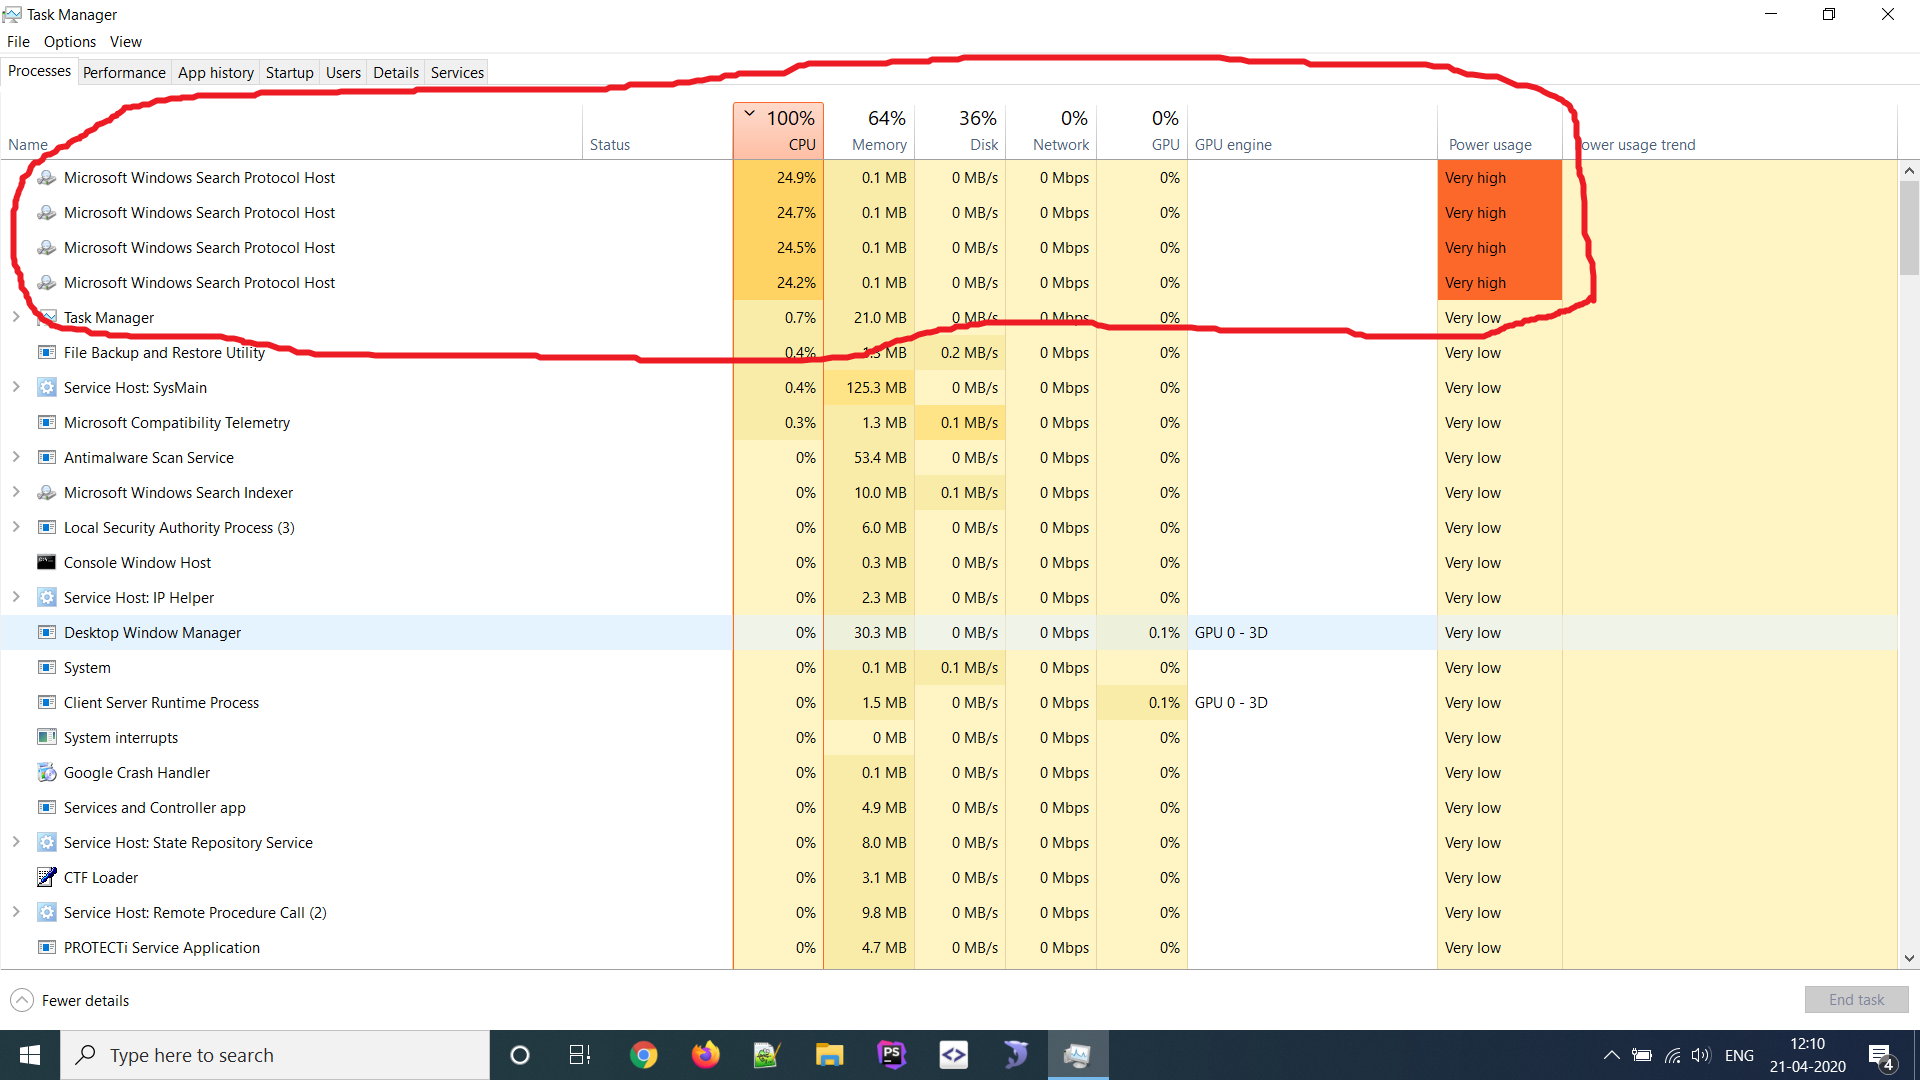 Microsoft Windows Search Protocol Host - 100 % CPU USAGE 2d0131d6-0395-4968-9d36-f5fe13afdaf9?upload=true.png